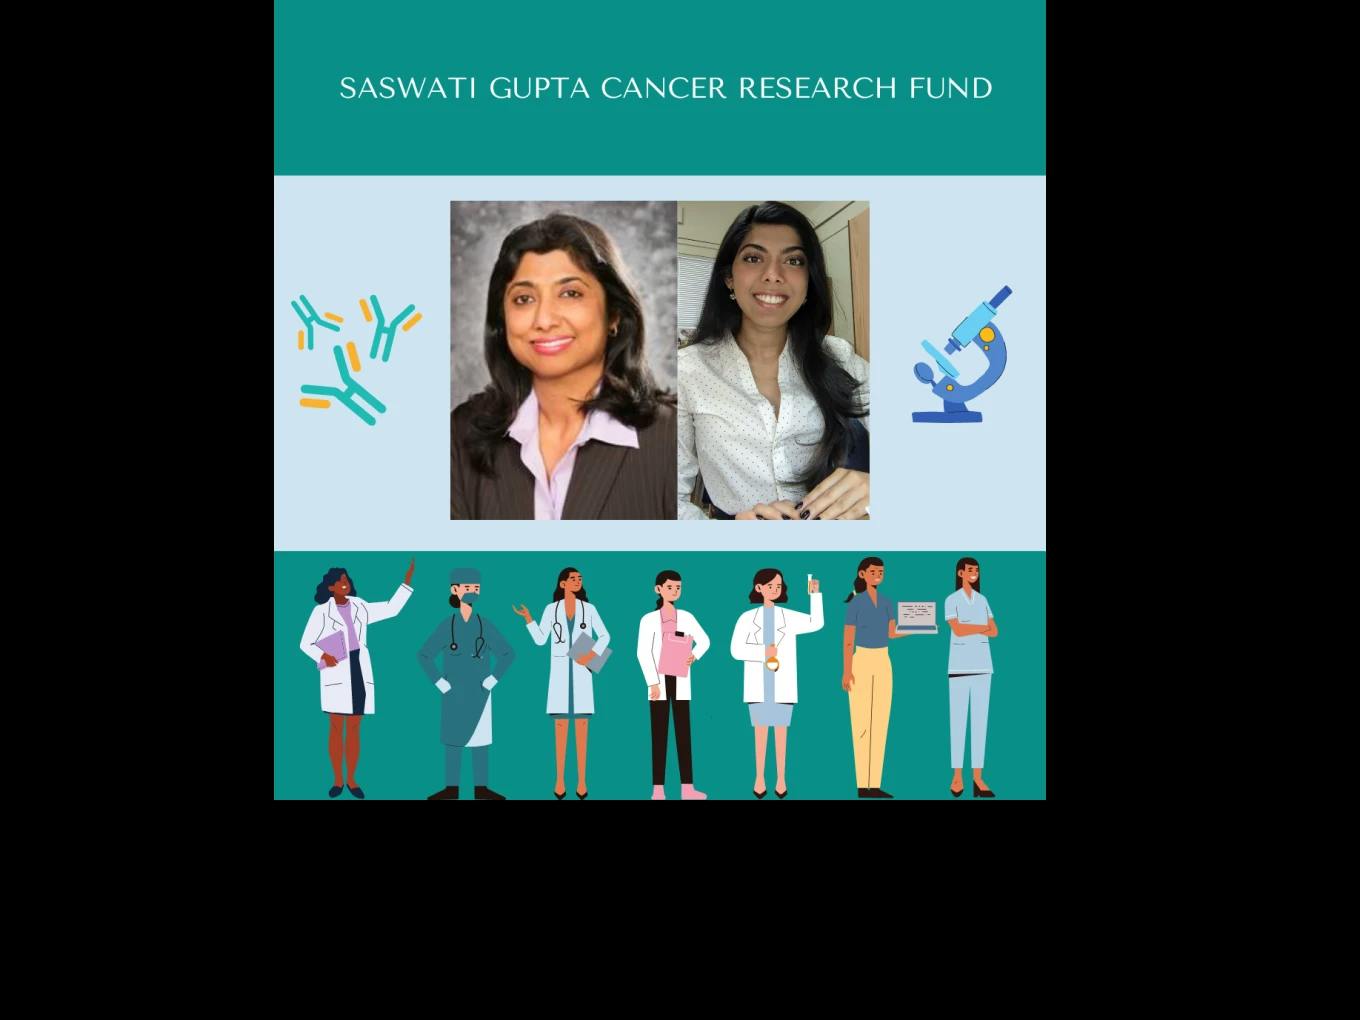 Saswati Gupta Cancer Research Fund